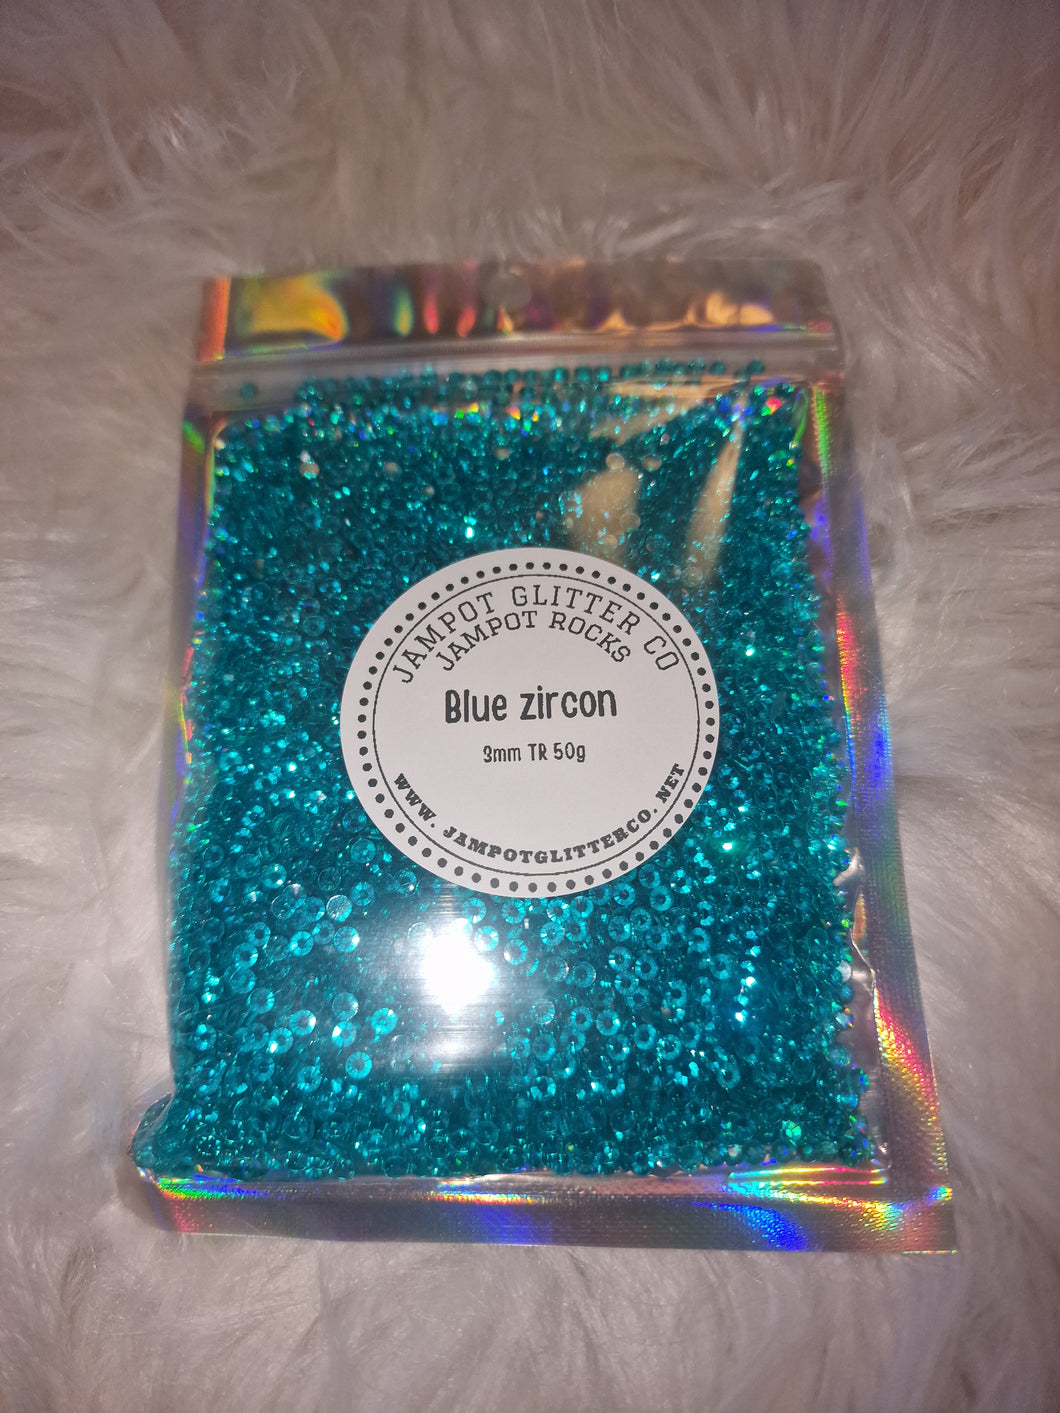 Blue Zircon 3mm 50g bag